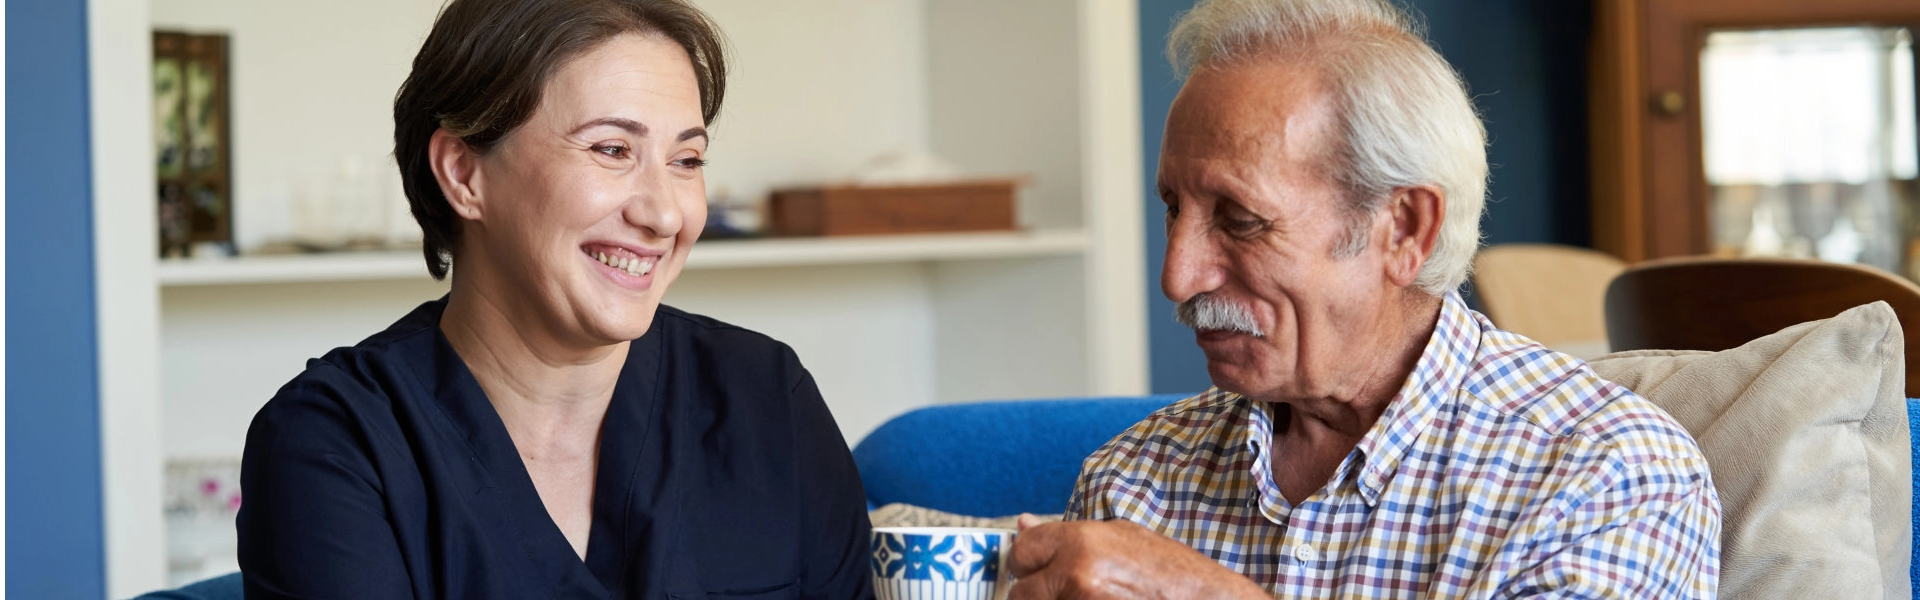 Caregiver talking to elderly